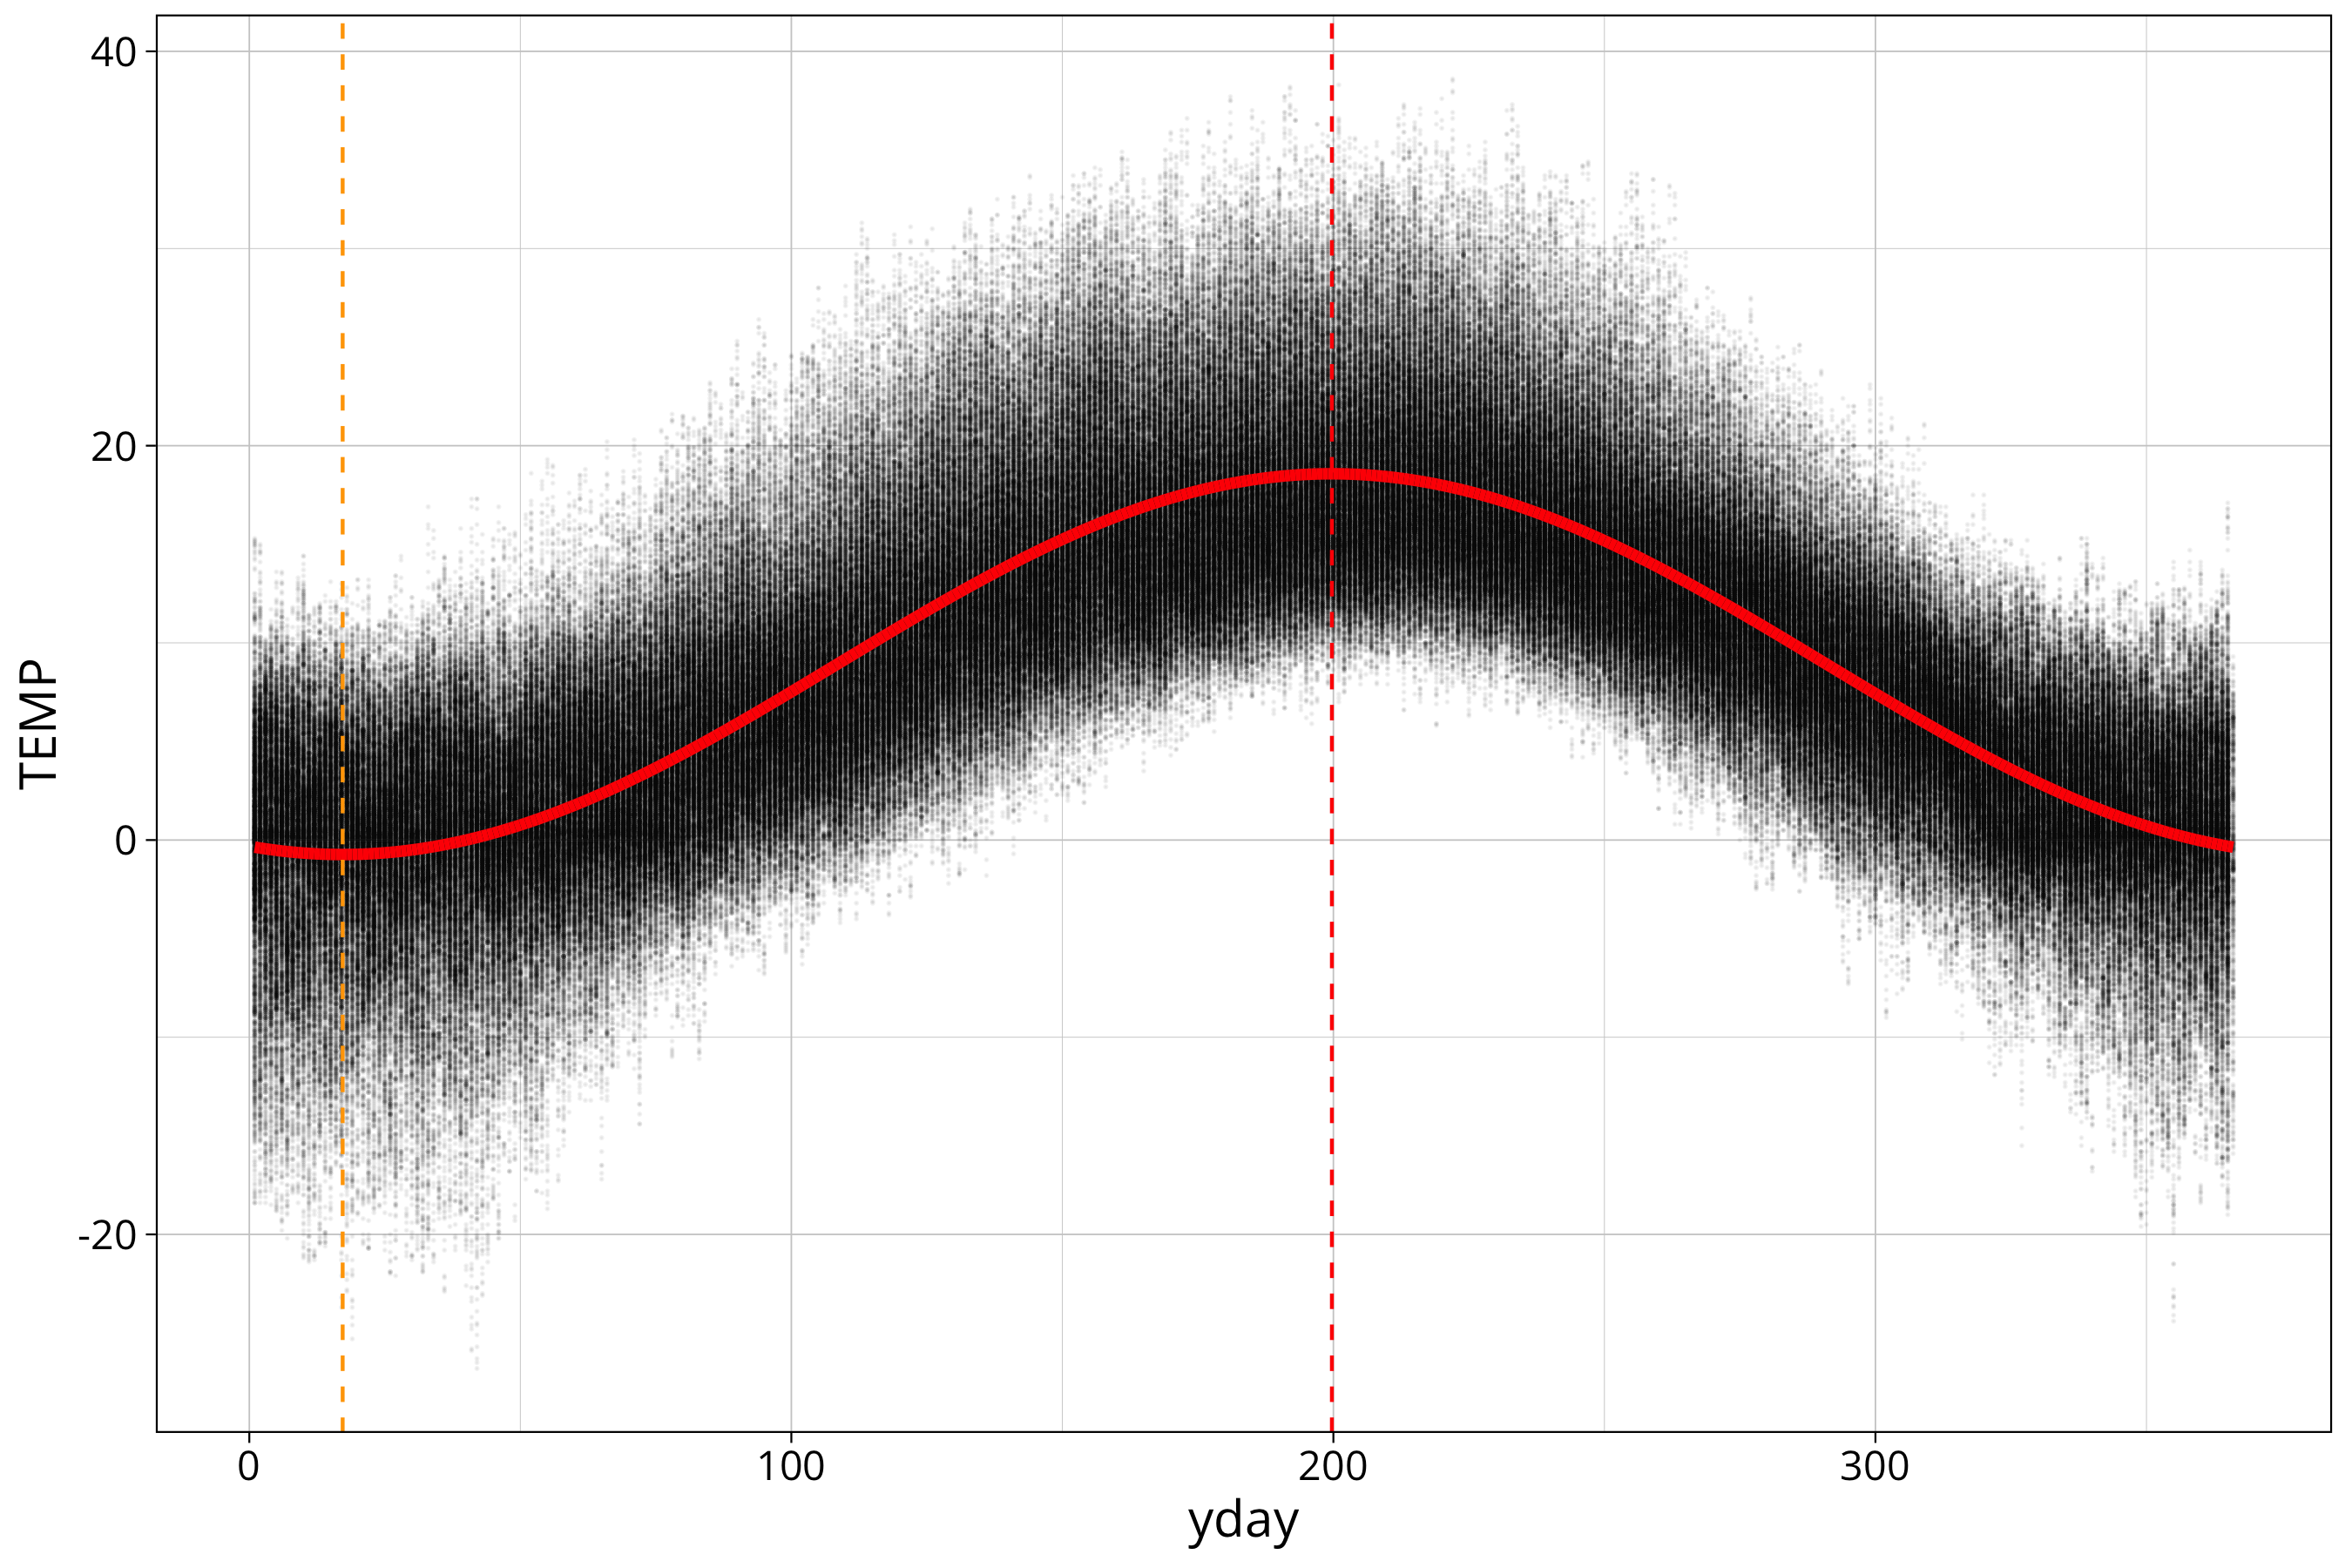 plot of chunk show pahse shift on data plot